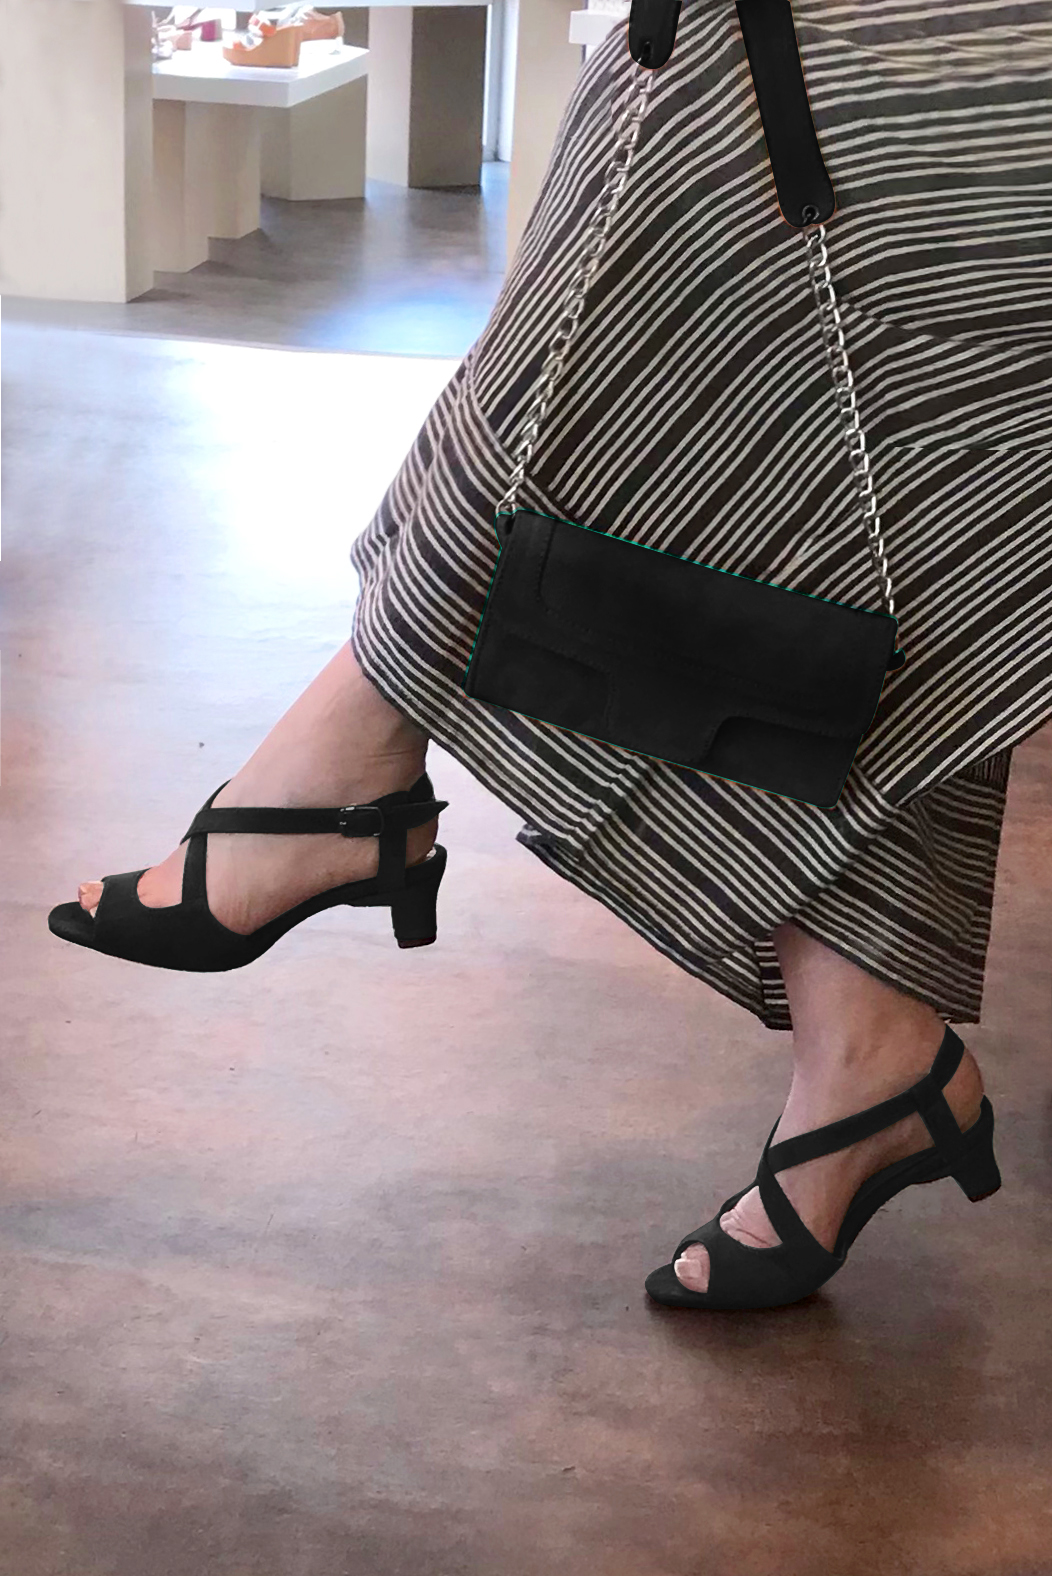 Matt black women's open back sandals, with crossed straps. Round toe. Low kitten heels. Worn view - Florence KOOIJMAN